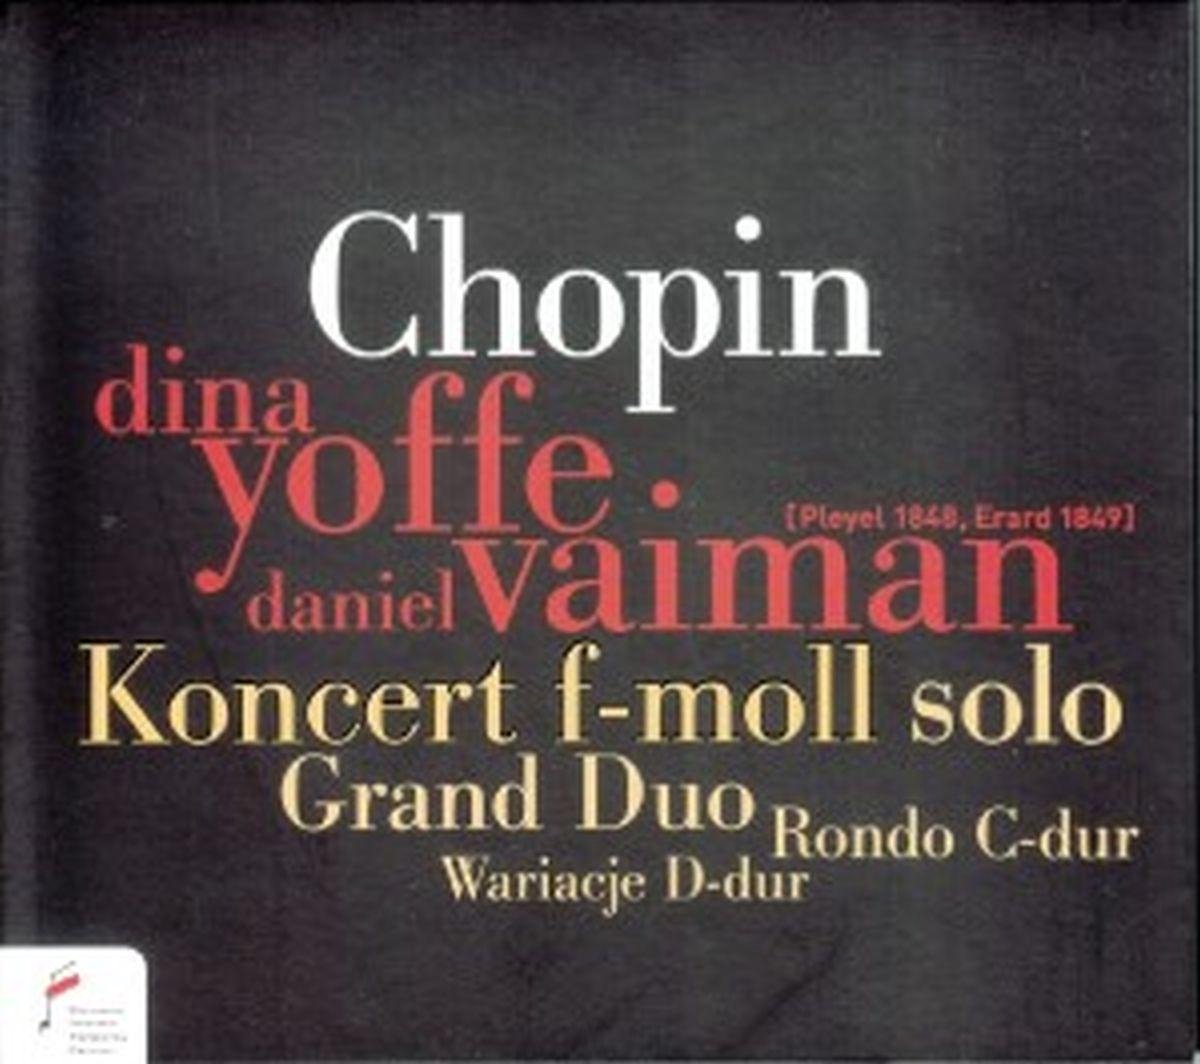 Koncert F-Moll Solo/Grand Duo/Rondo - Yoffe Vaiman